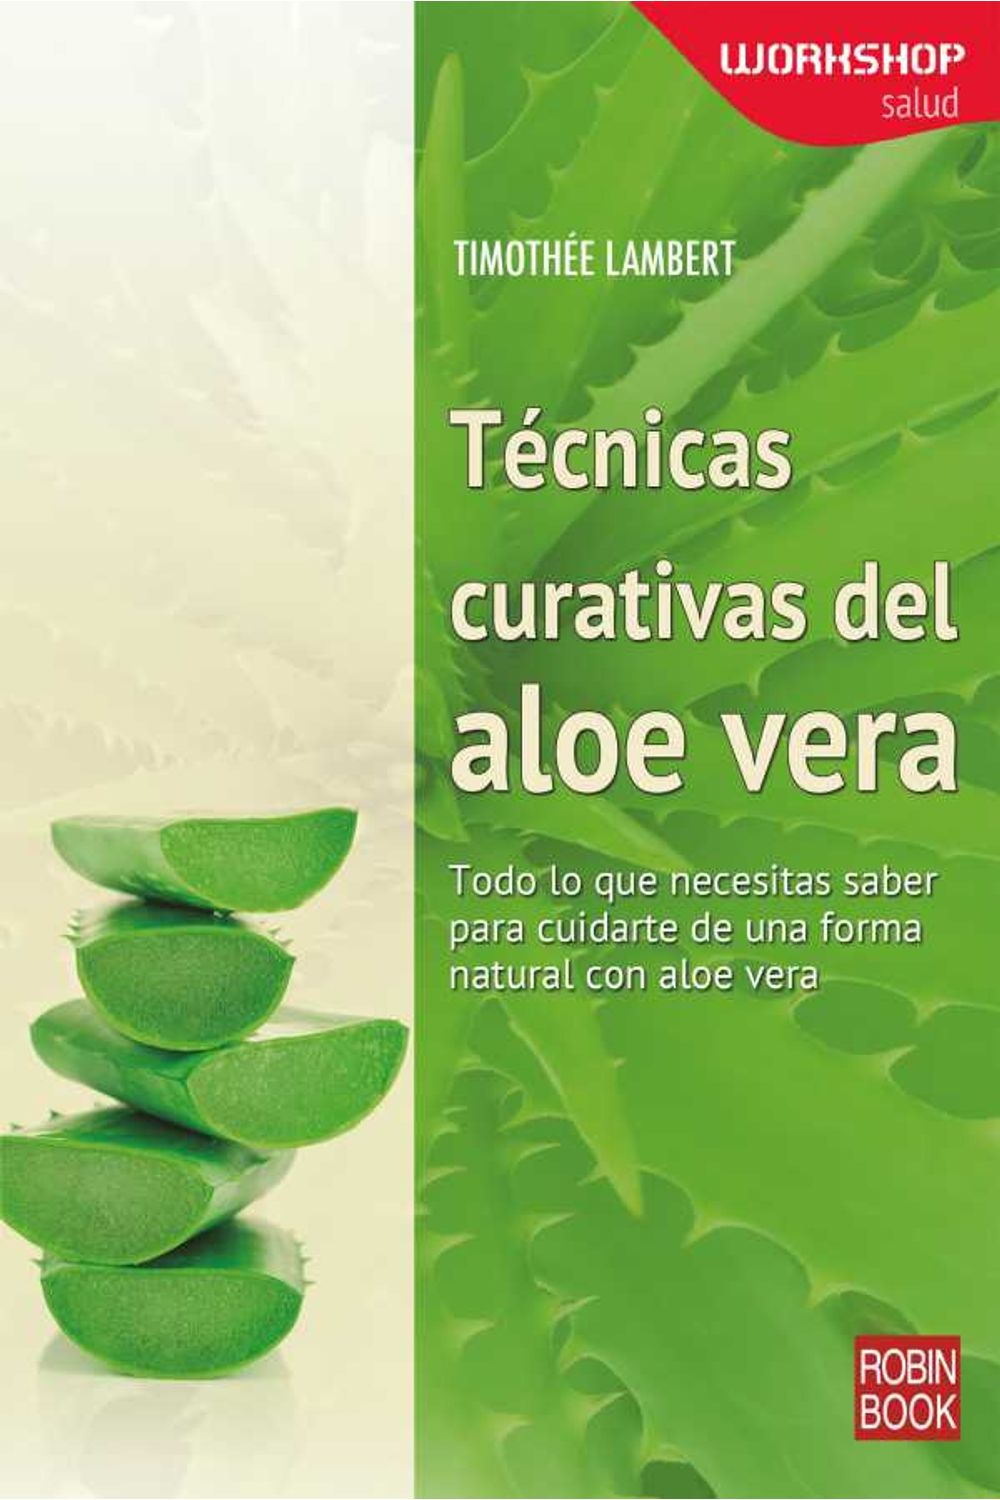 bw-teacutecnicas-curativas-del-aloe-vera-robinbook-9788499176291